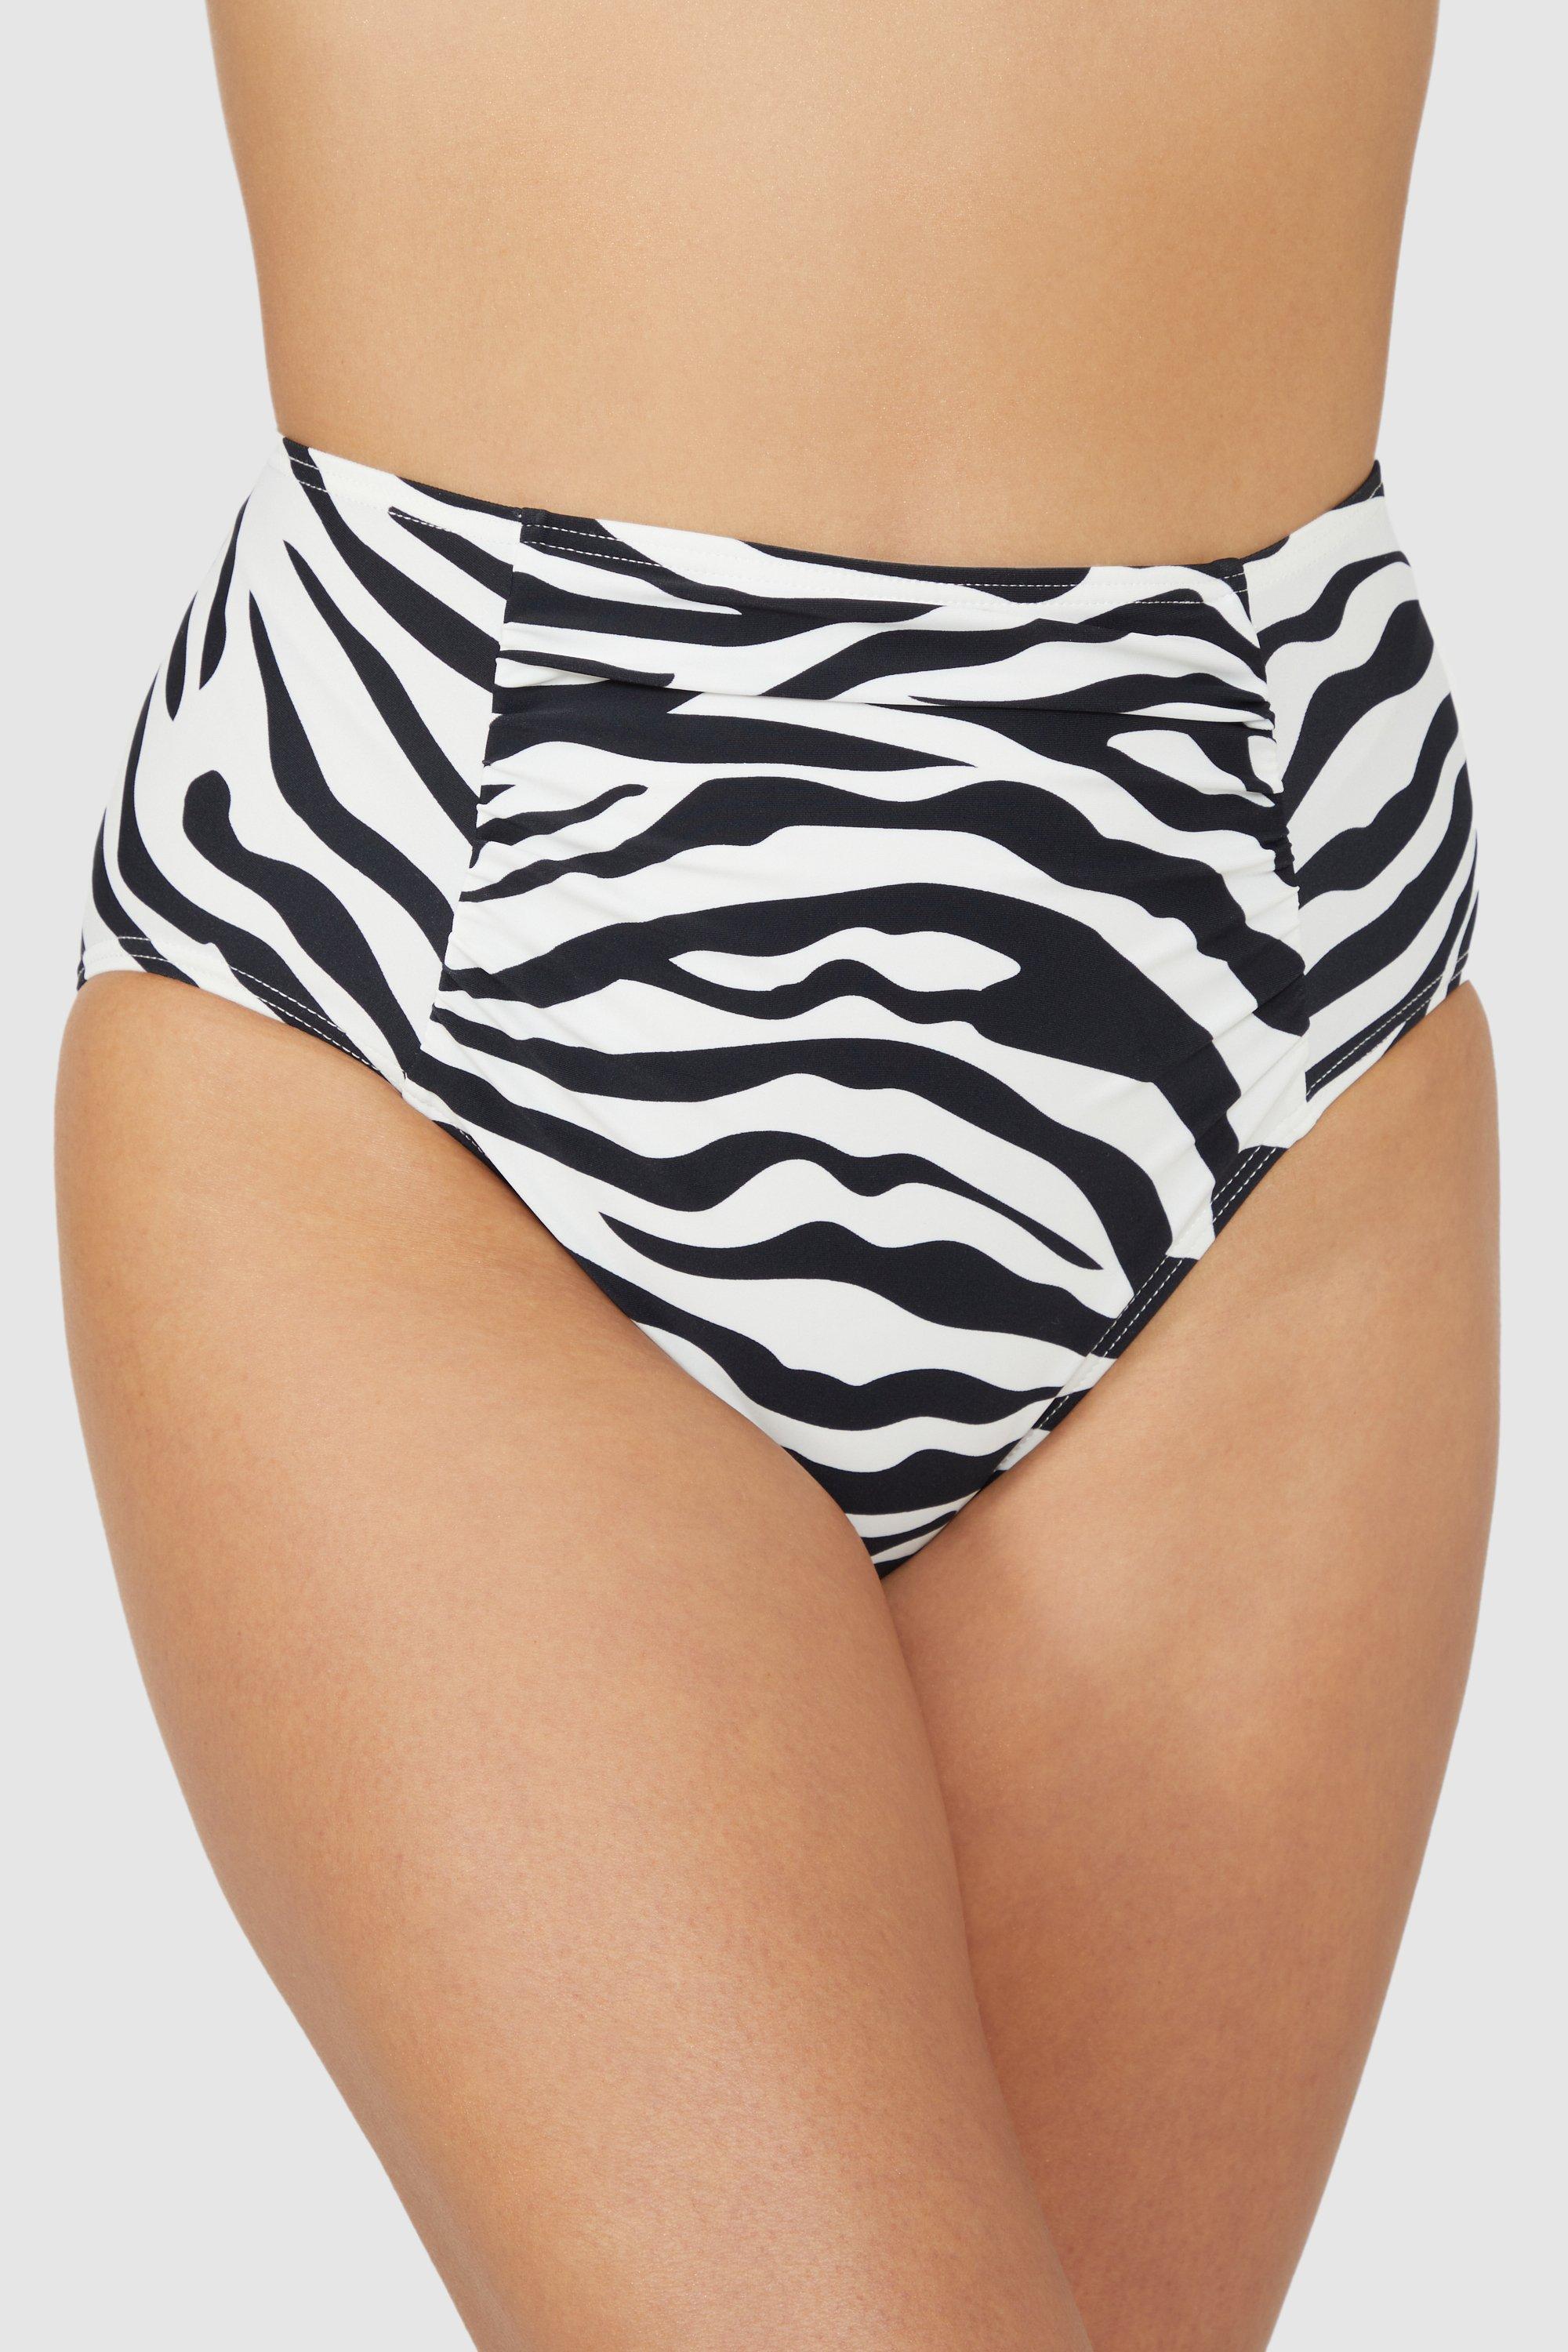 Gorgeous Zebra High Waist Bikini Bottom